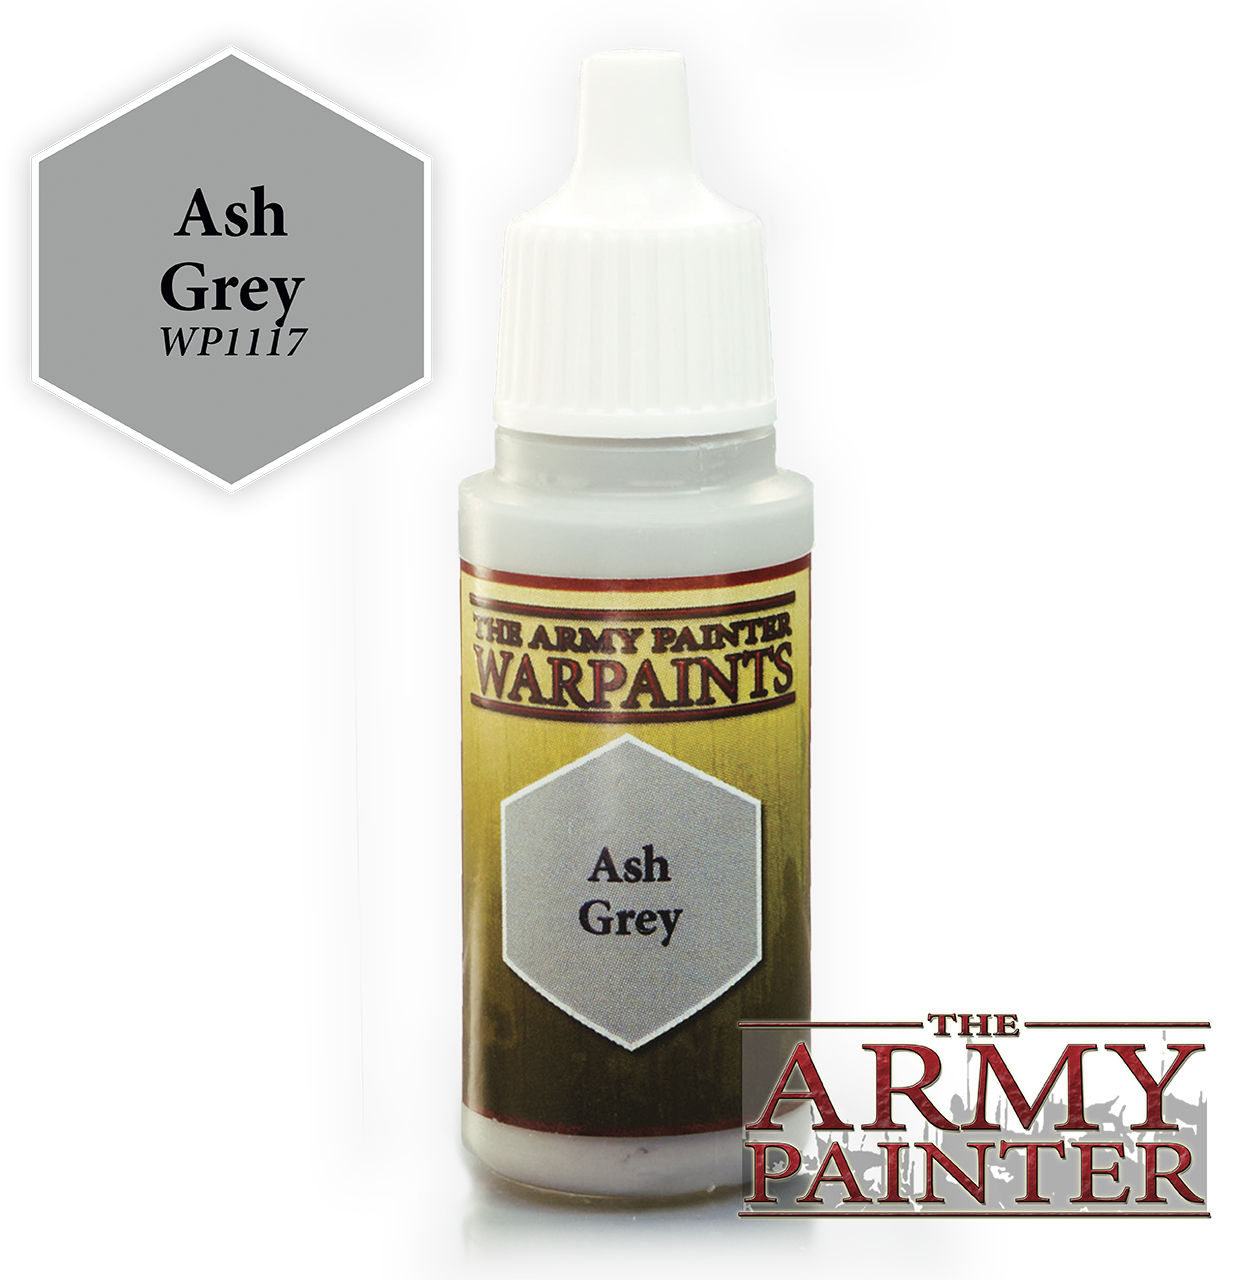 The ARMY PAINTER: Acrylics Warpaint - Ash Grey | Tacoma Games